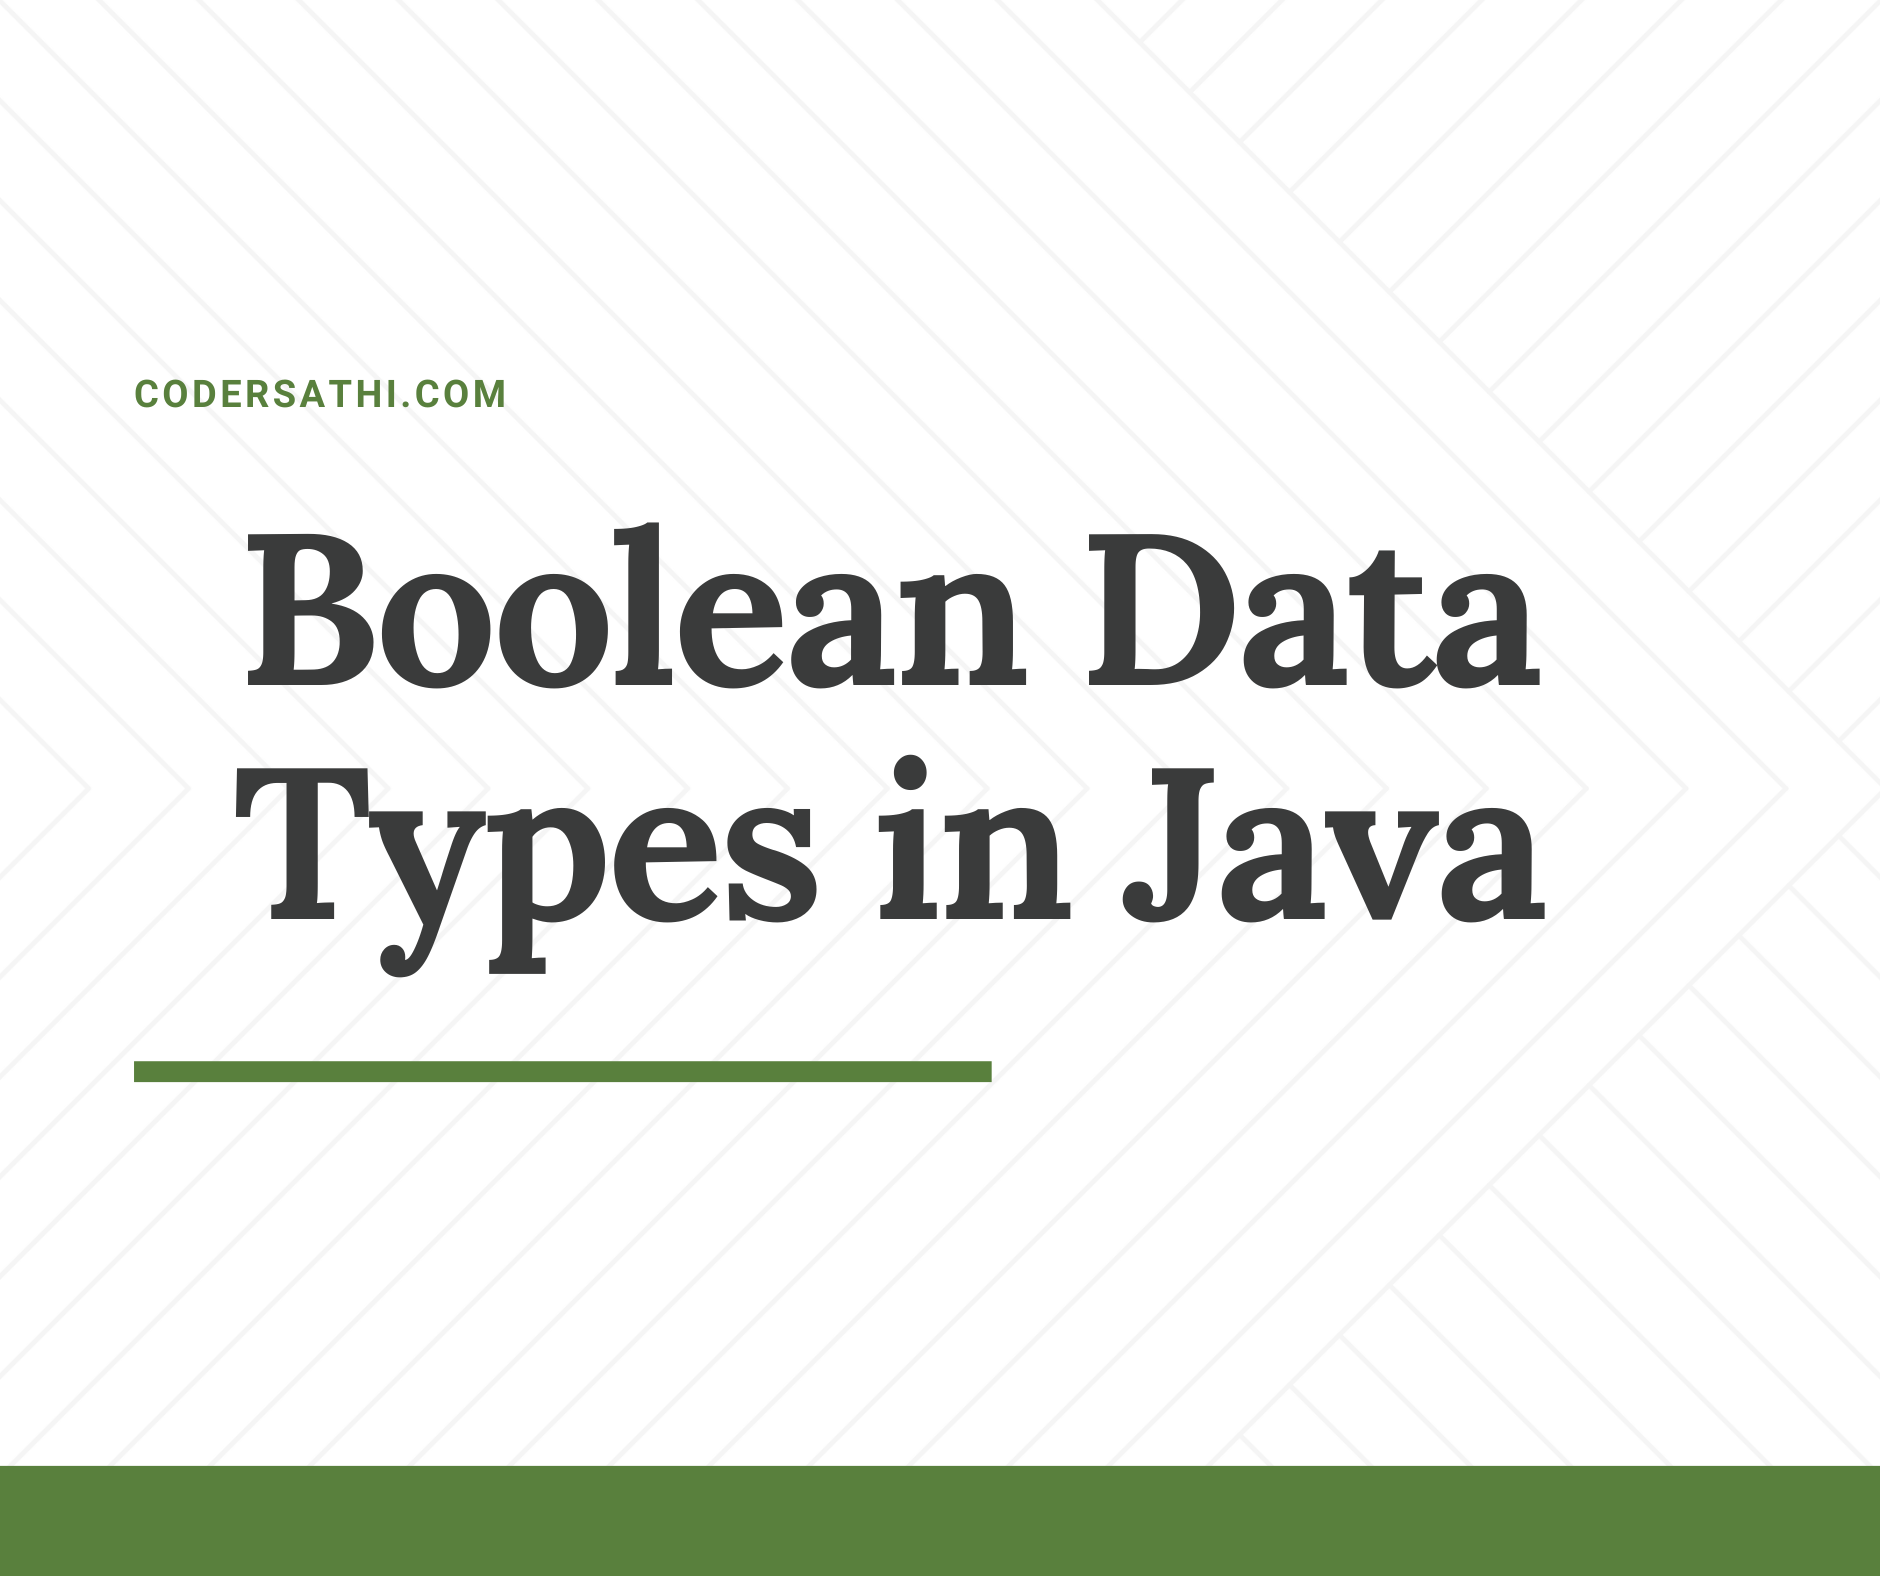 Boolean data types in java